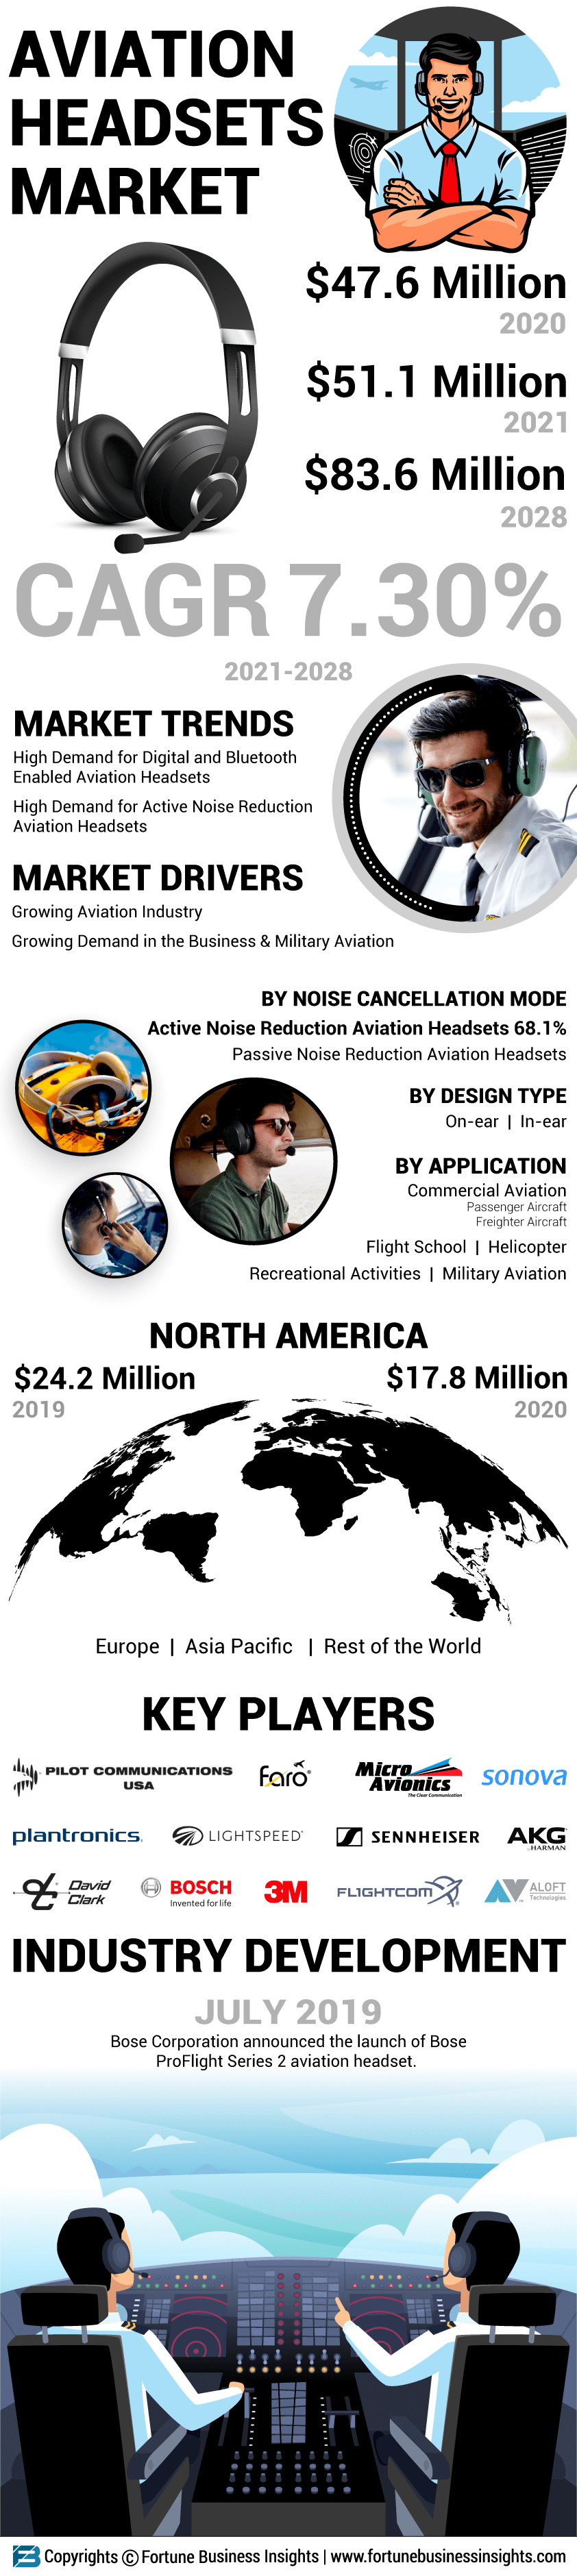 Aviation Headsets Market